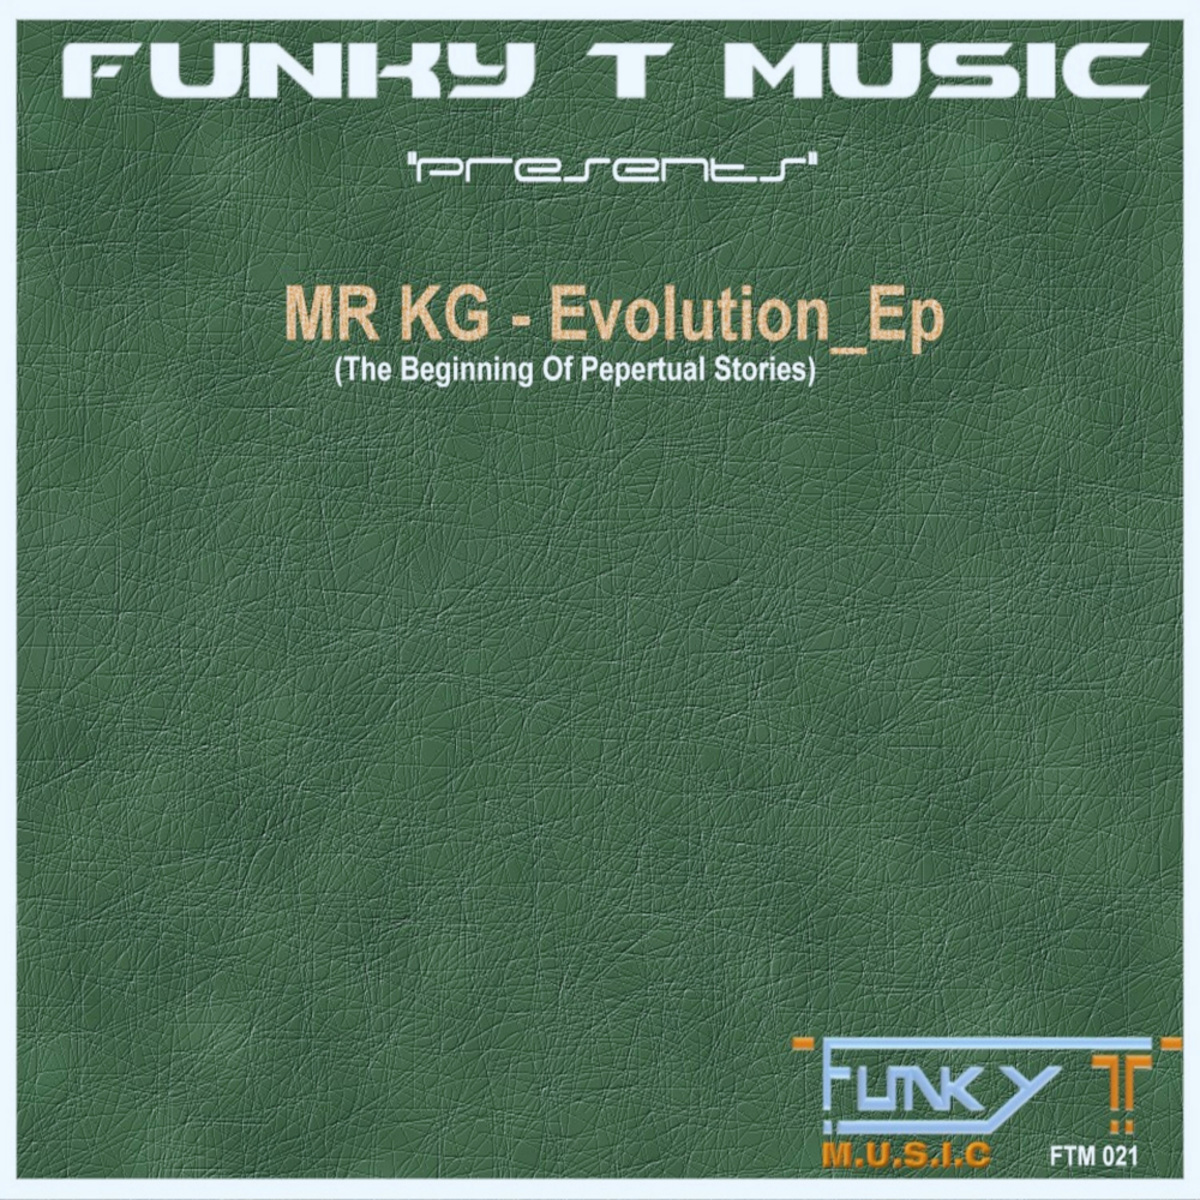 MR KG - Evolution_Ep / Funky T Music